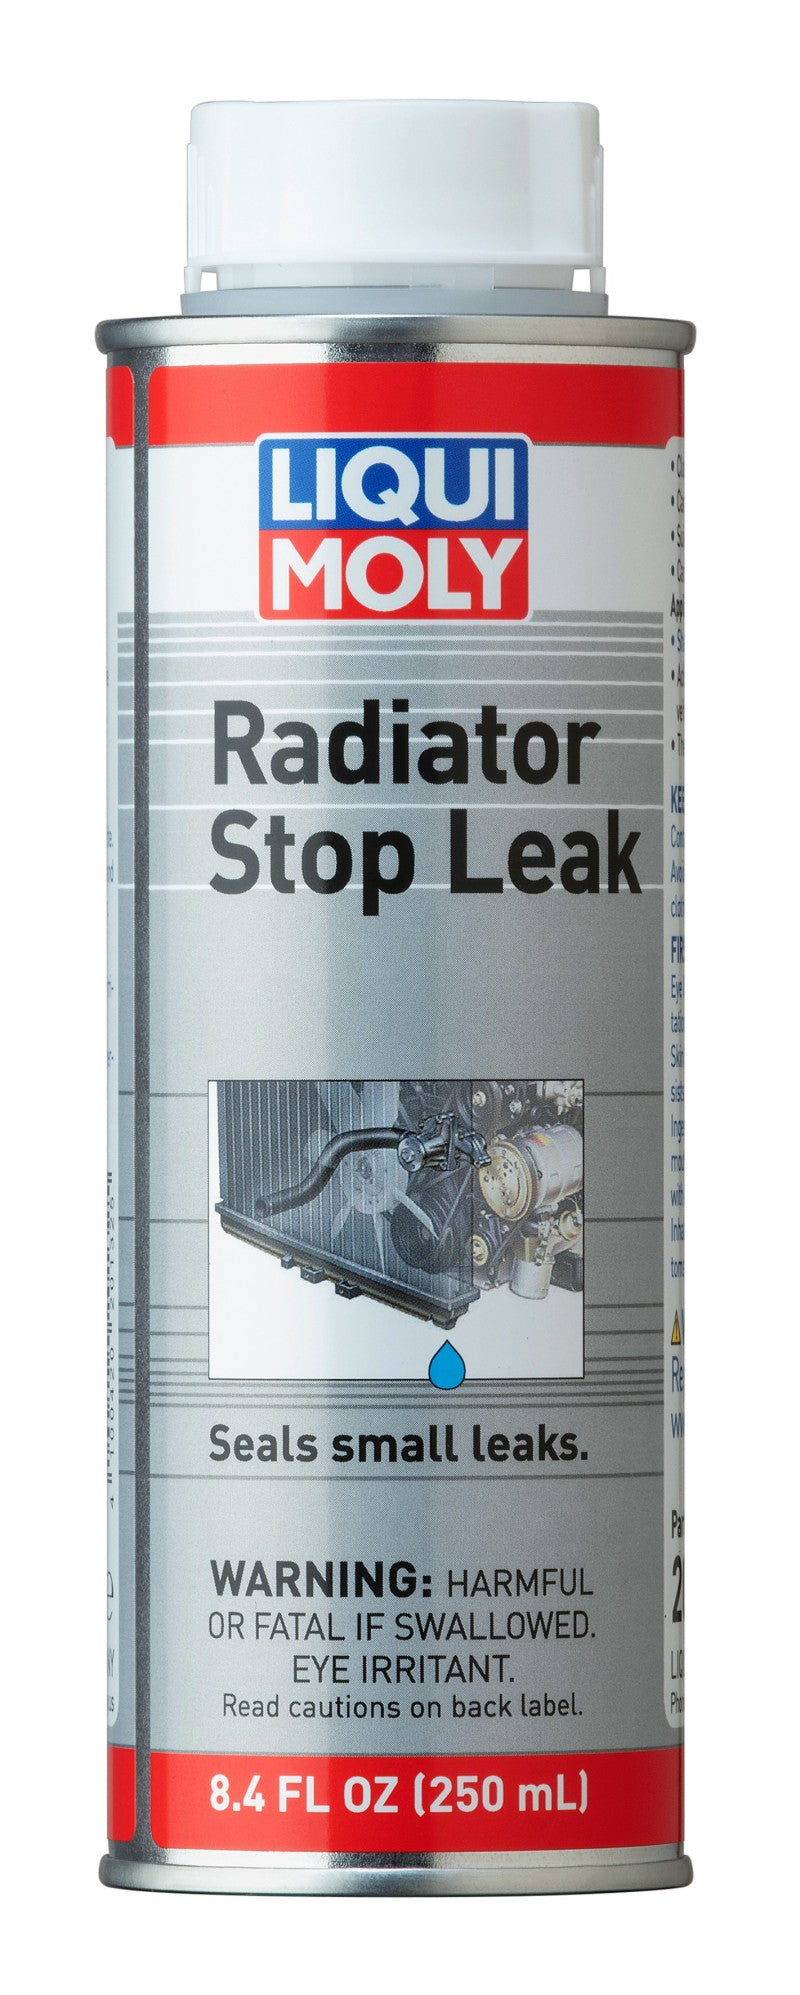 LIQUI MOLY 250mL Radiator Stop-Leak.